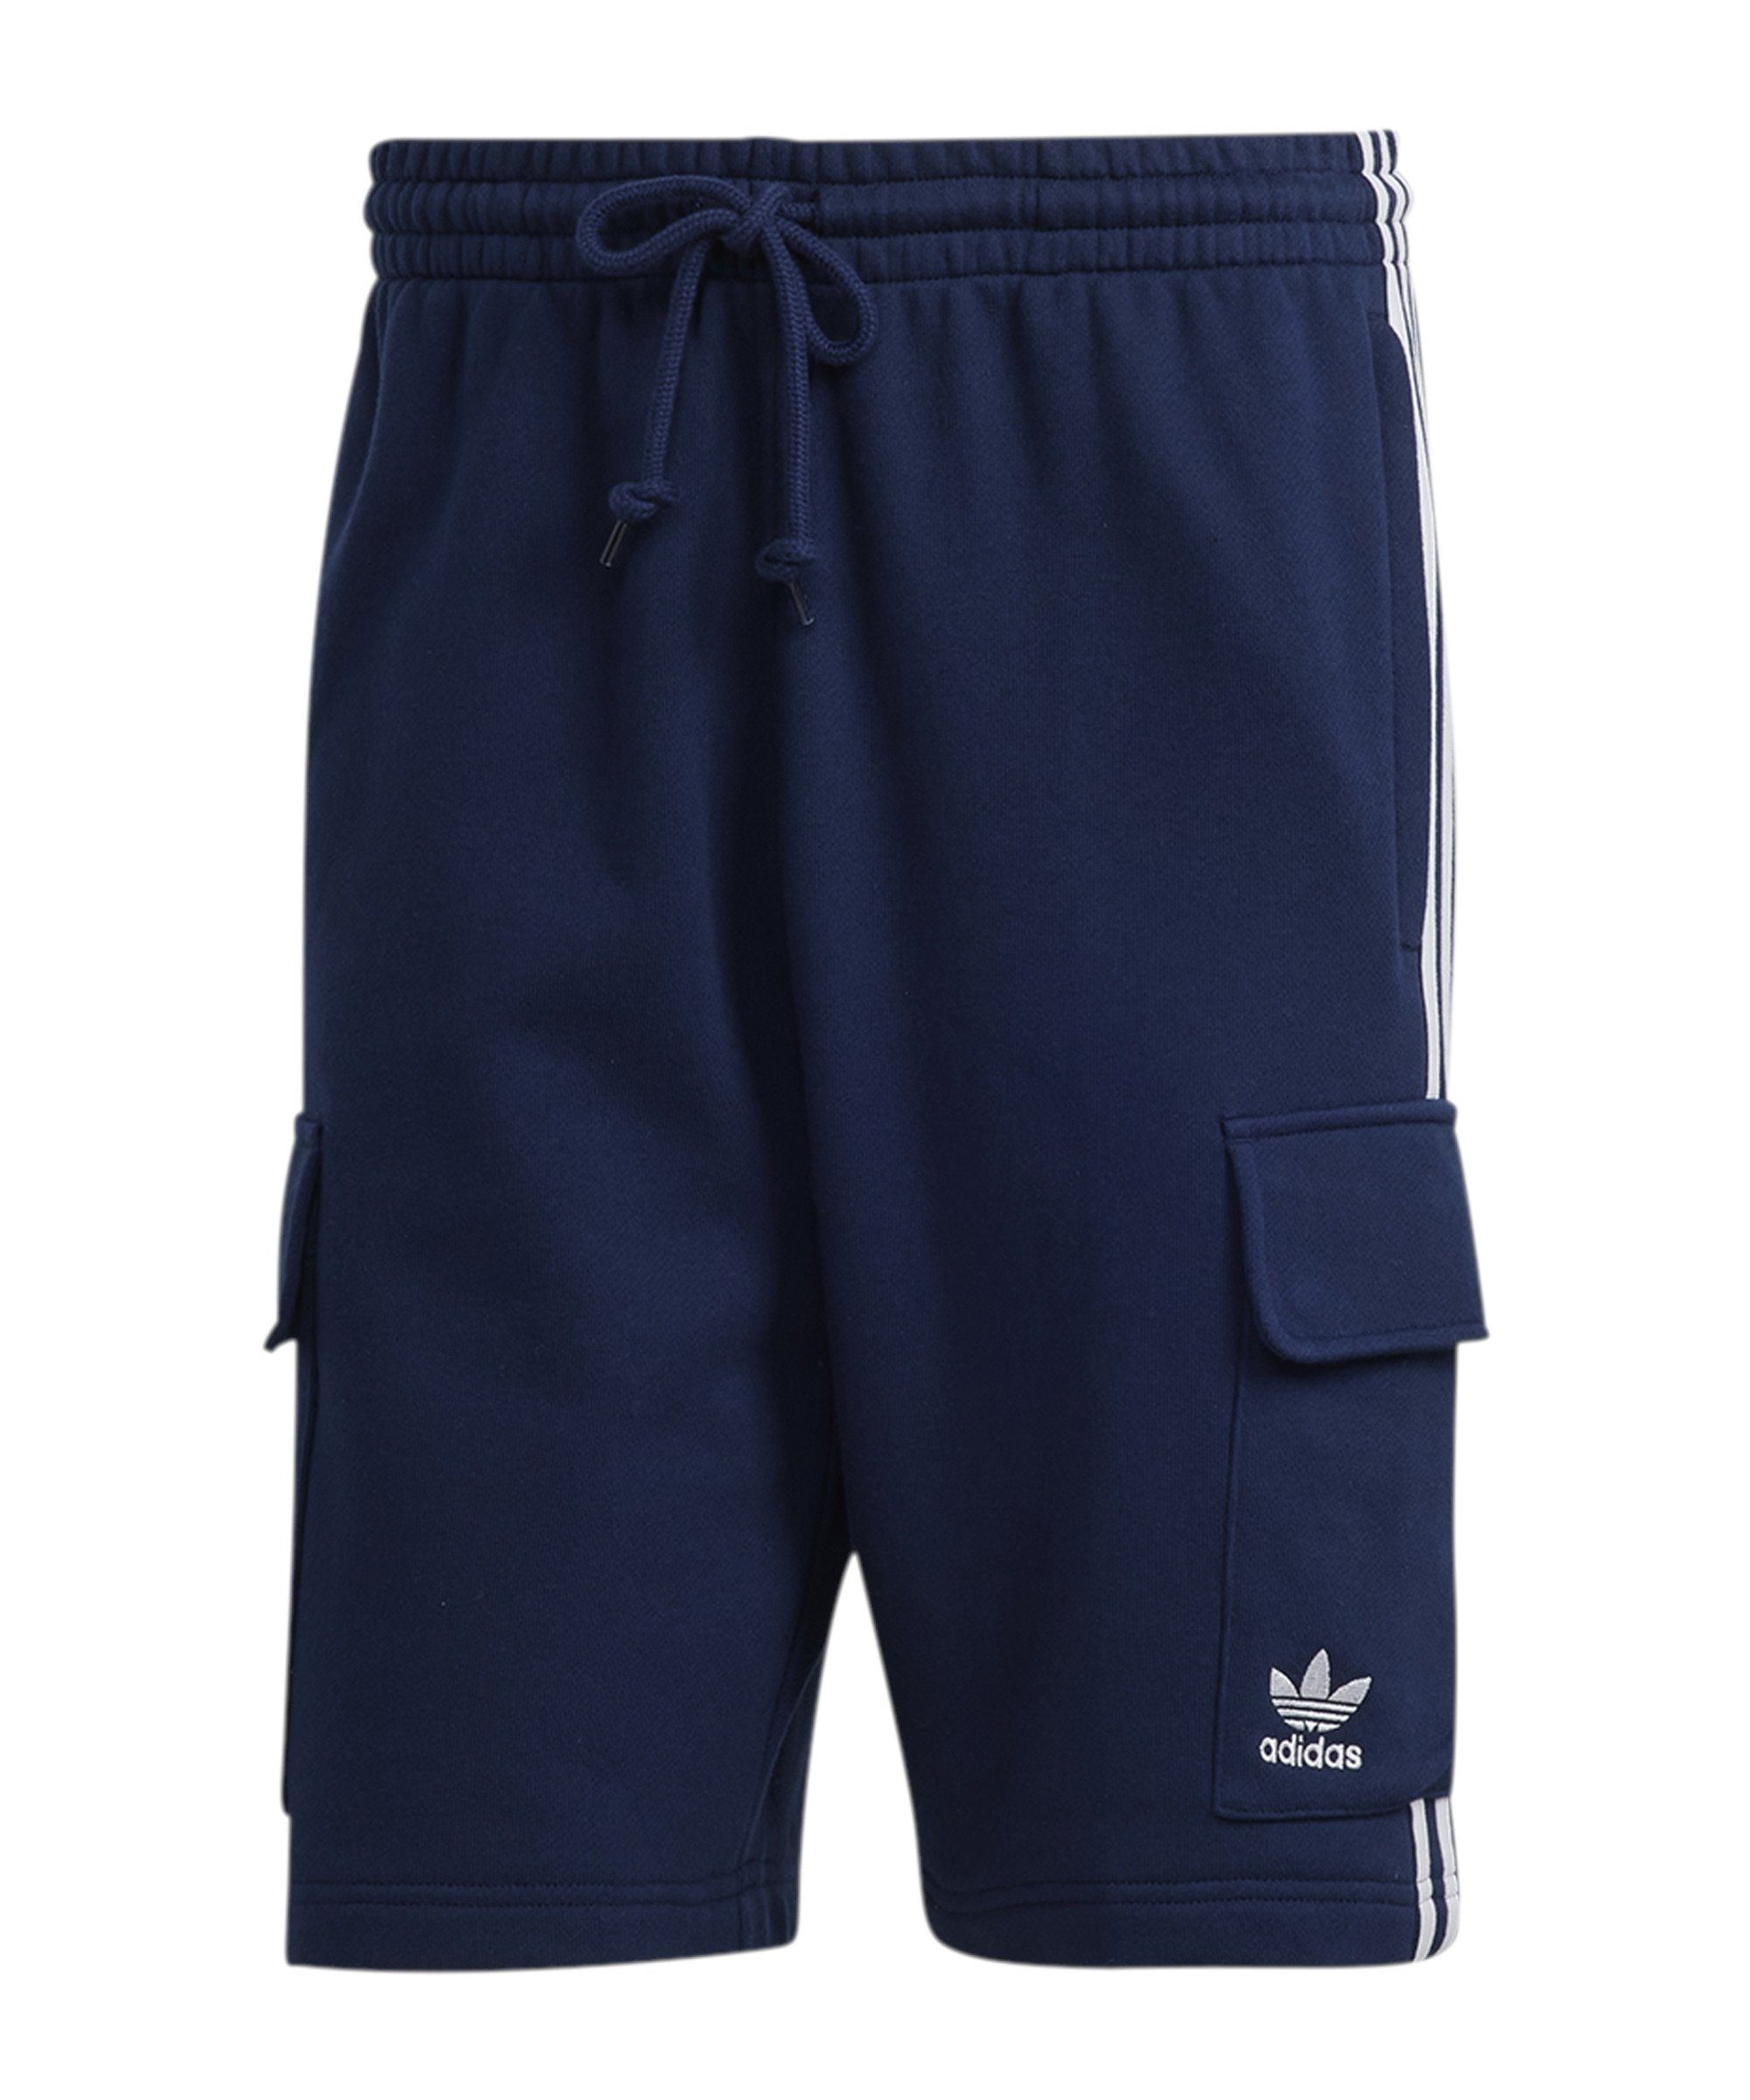 Jogginghose Originals 3S Cargo Short adidas blau